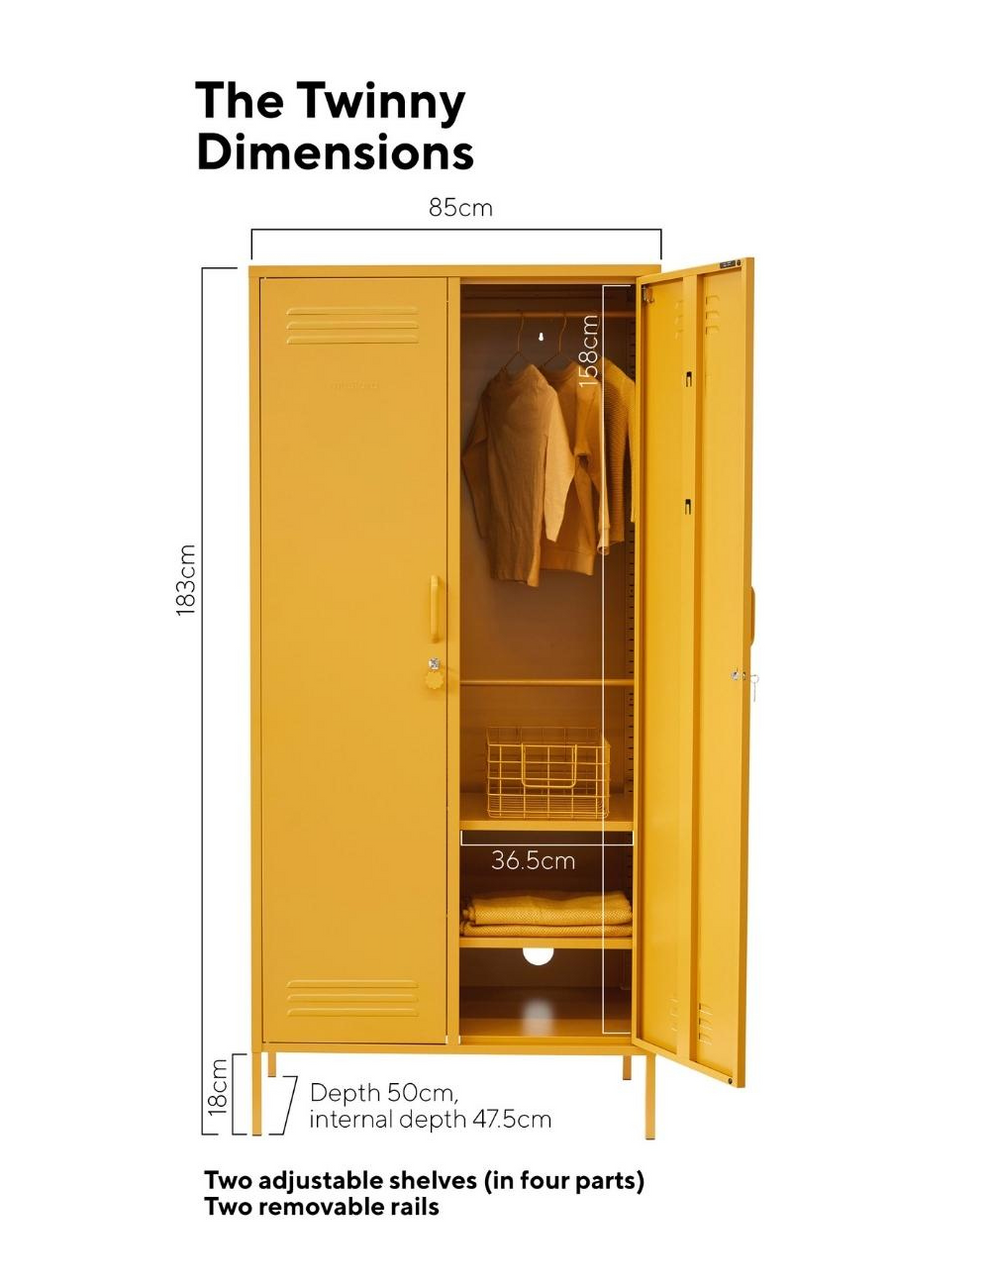 Mustard Made Lockers - The Twinny Double Locker - Mustard Yellow Dimensions 